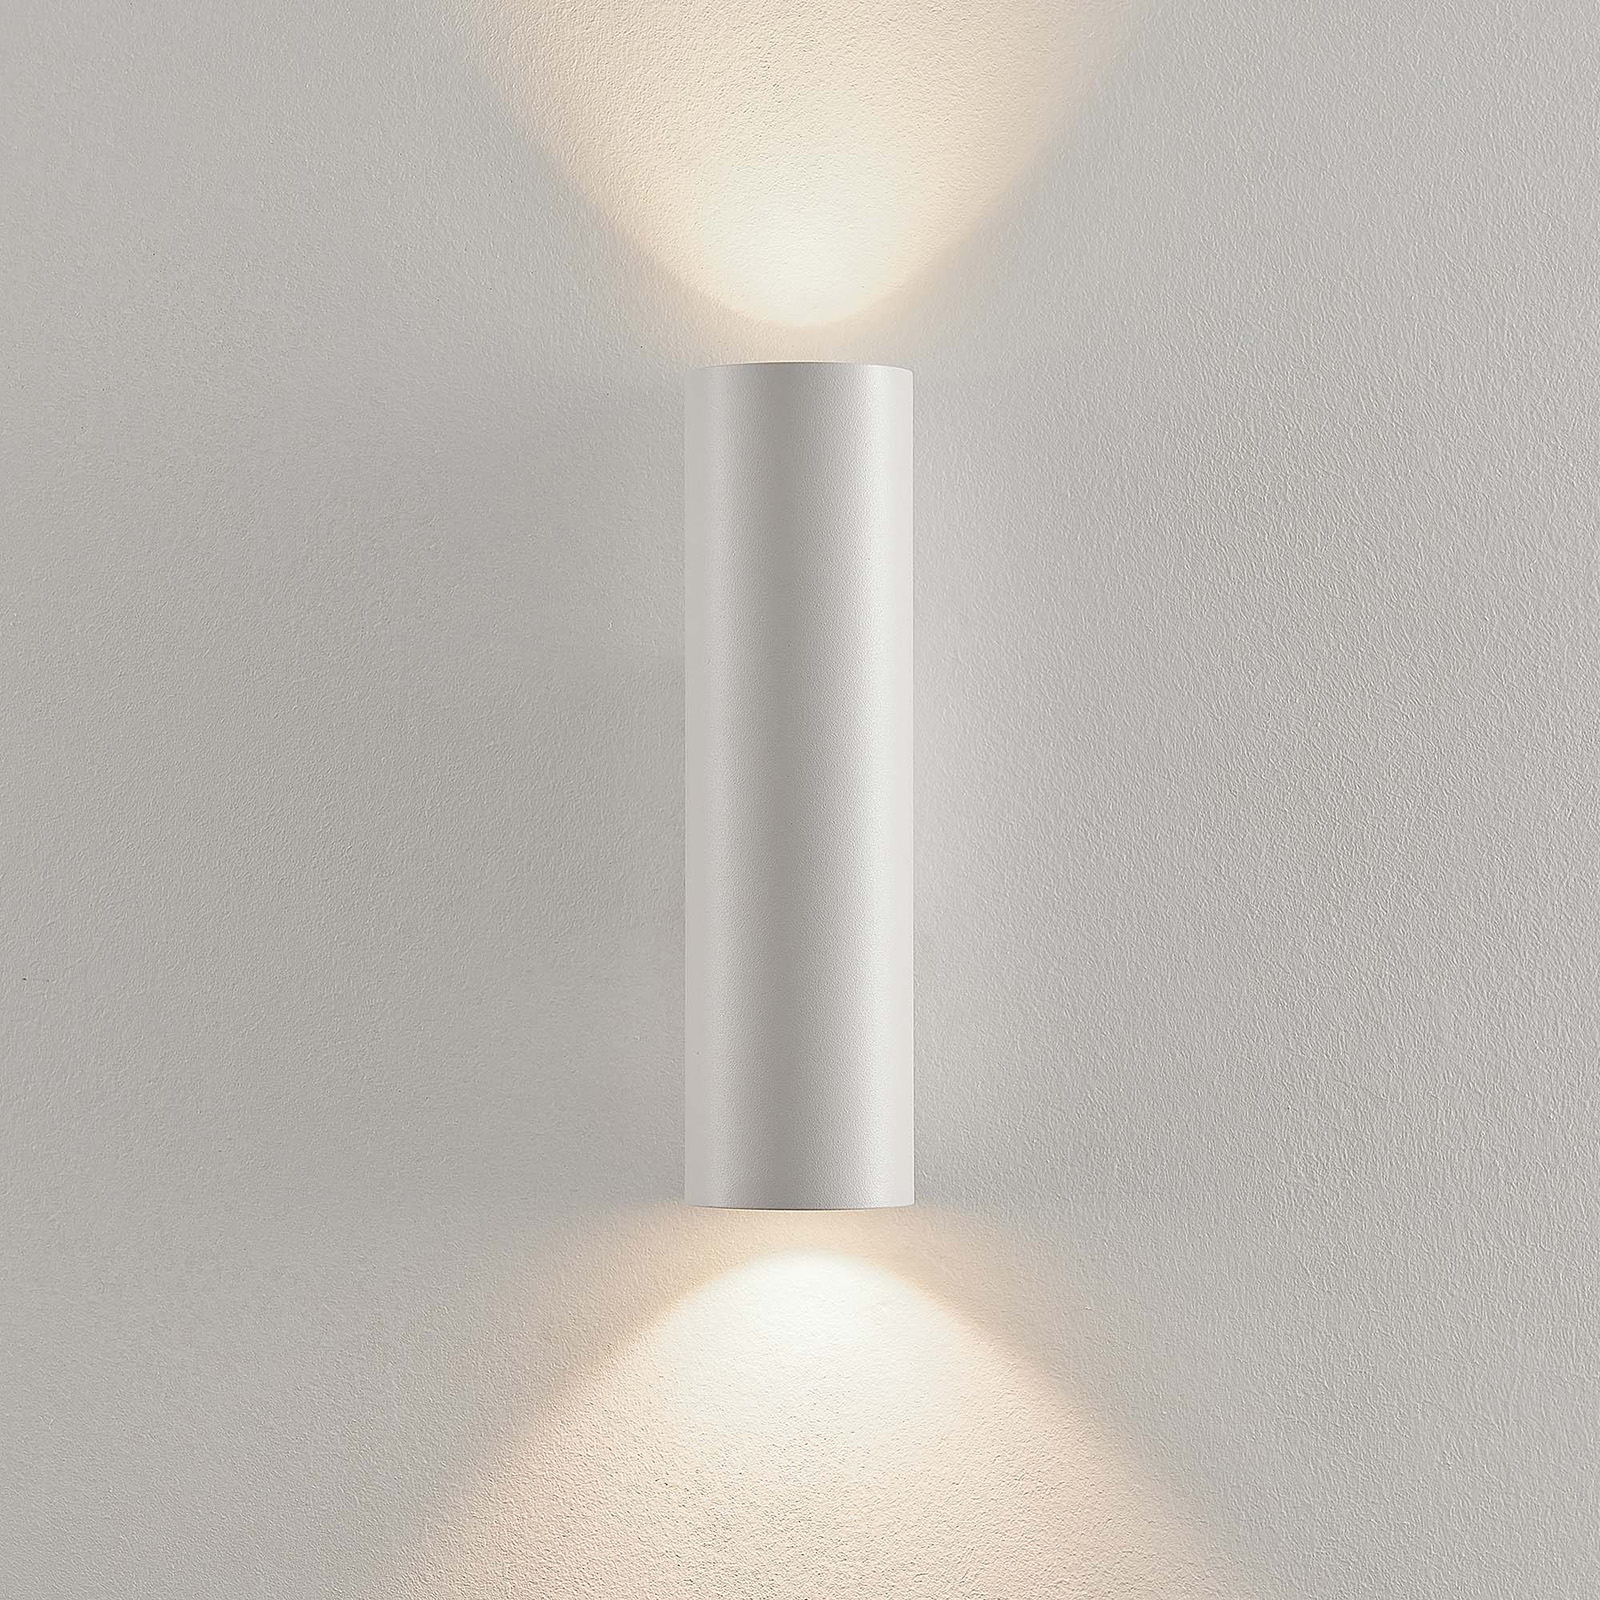 Arcchio wall light Brinja, 2-bulb, white, round, GU10